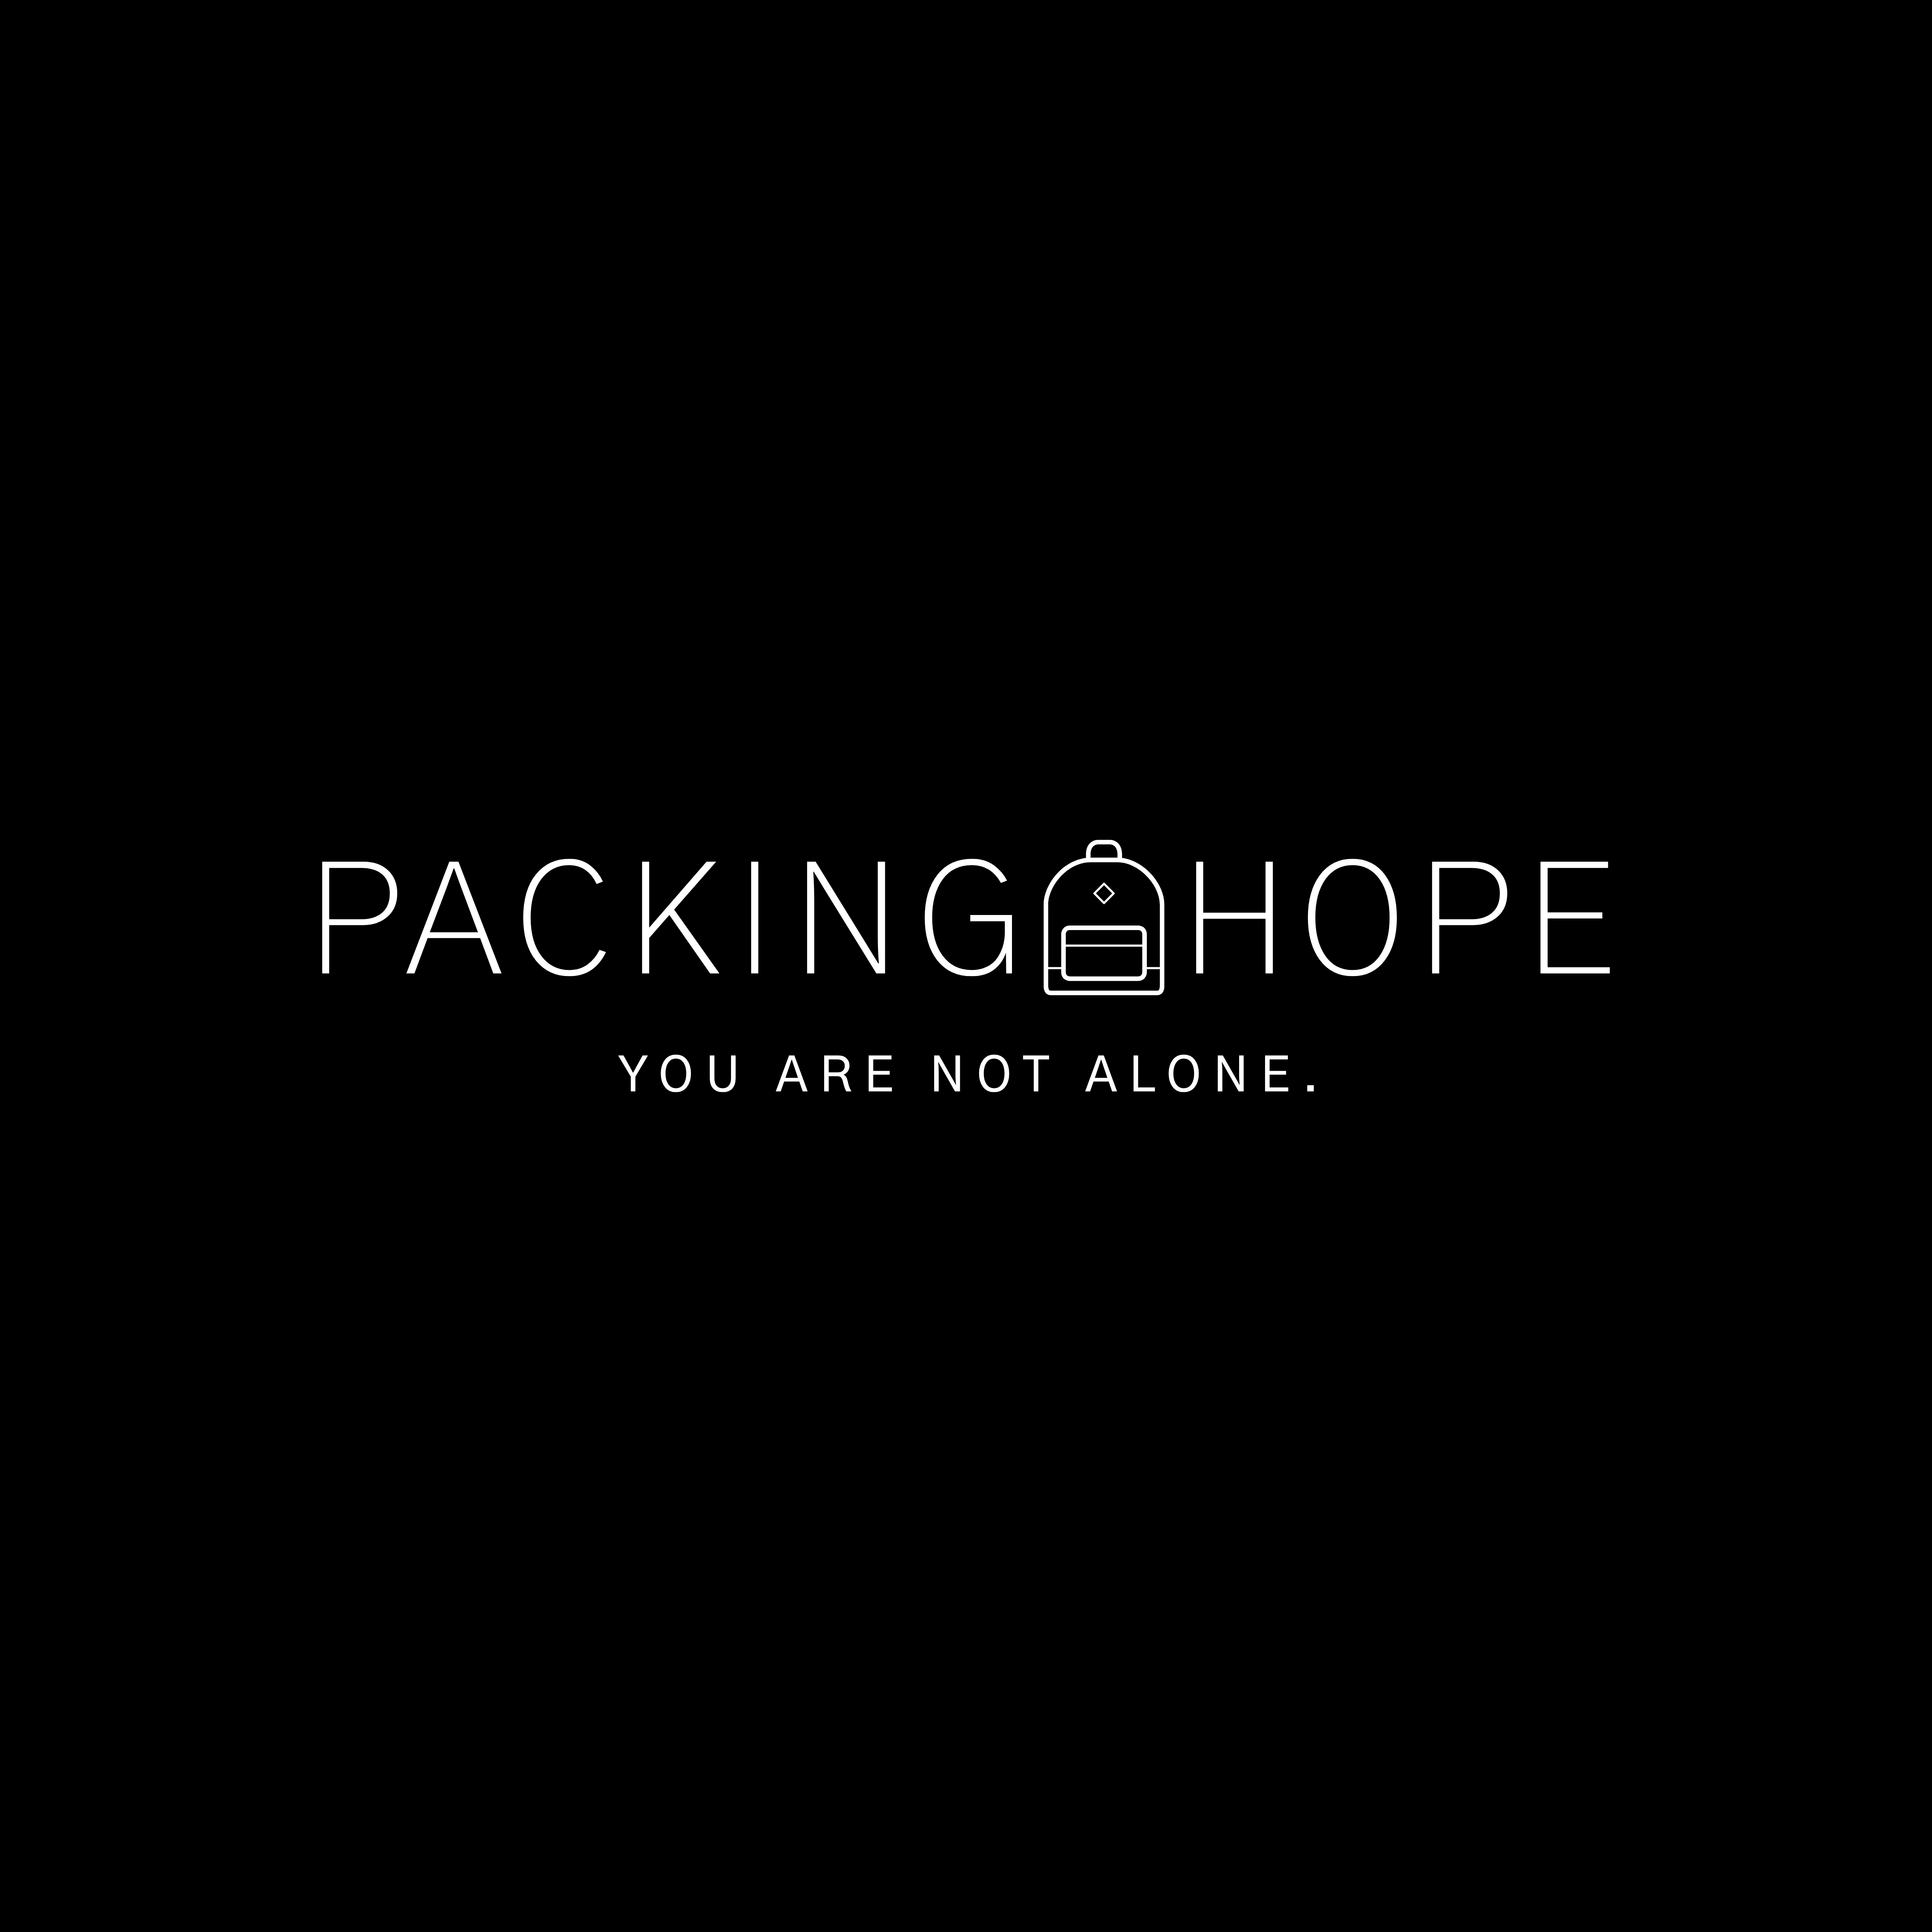 Packing Hope logo